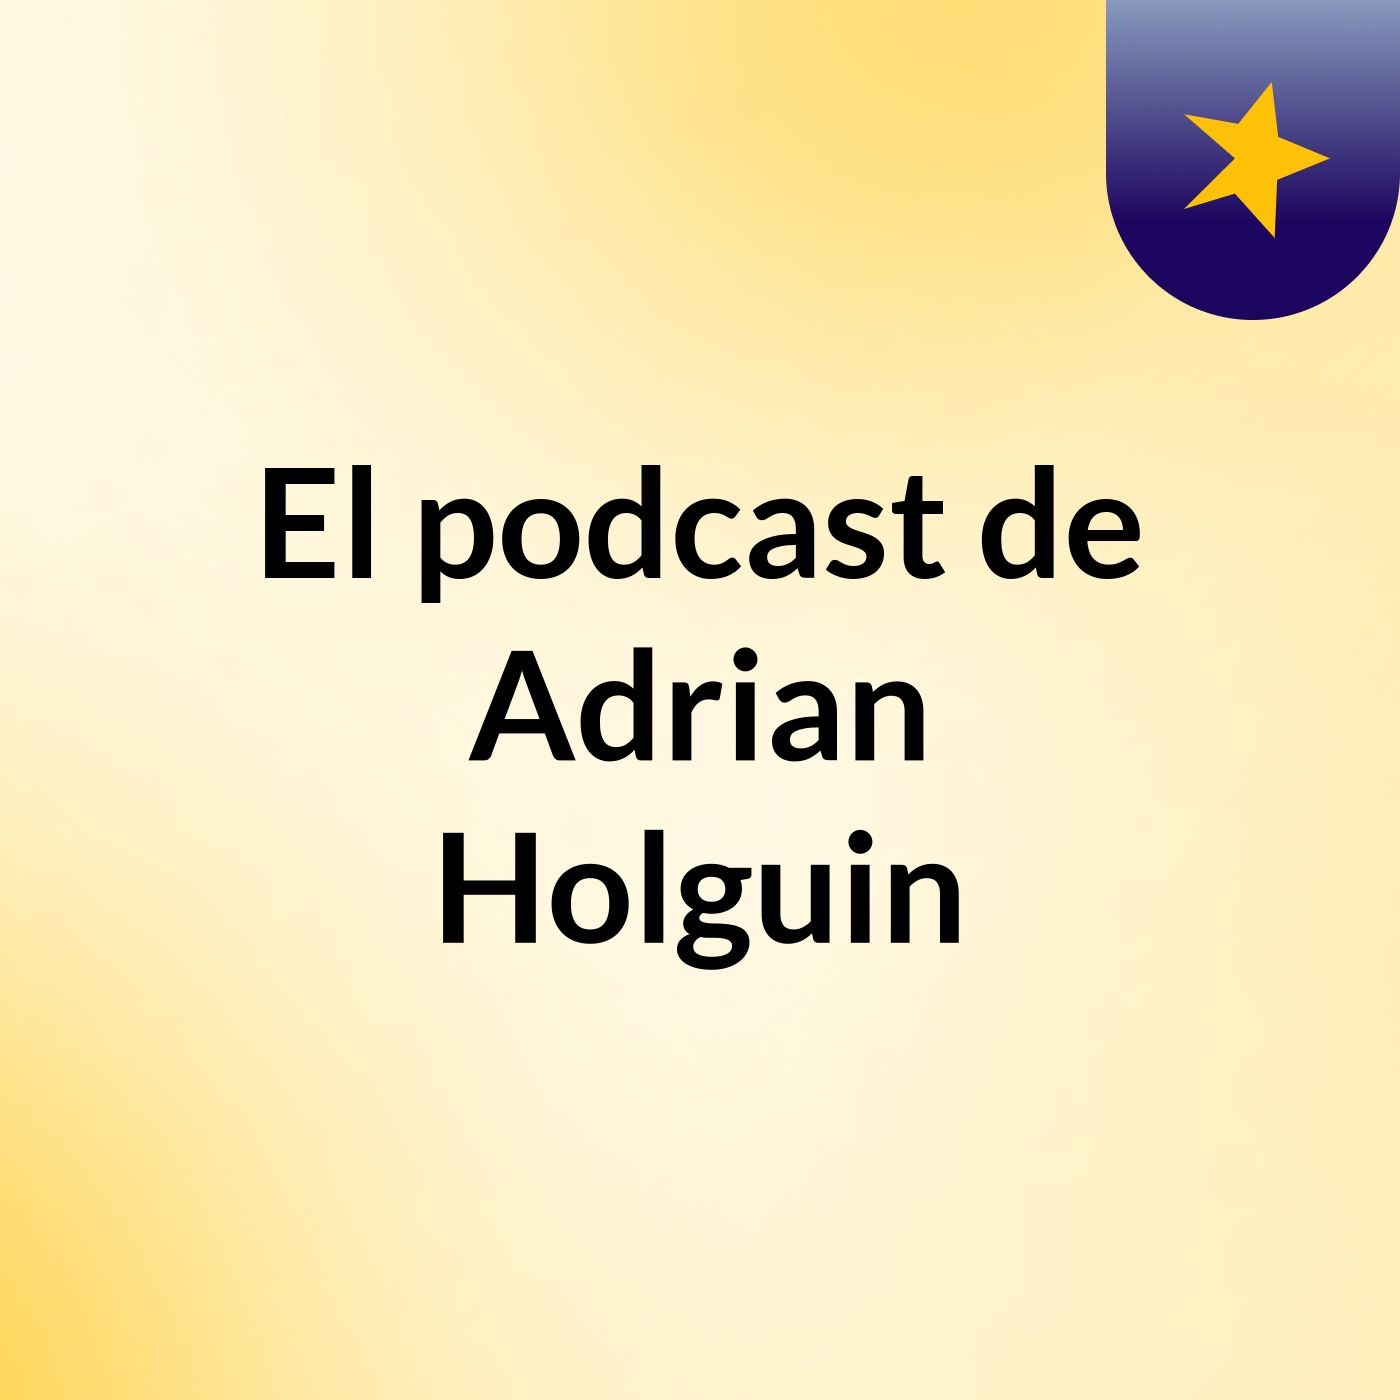 El podcast de Adrian Holguin